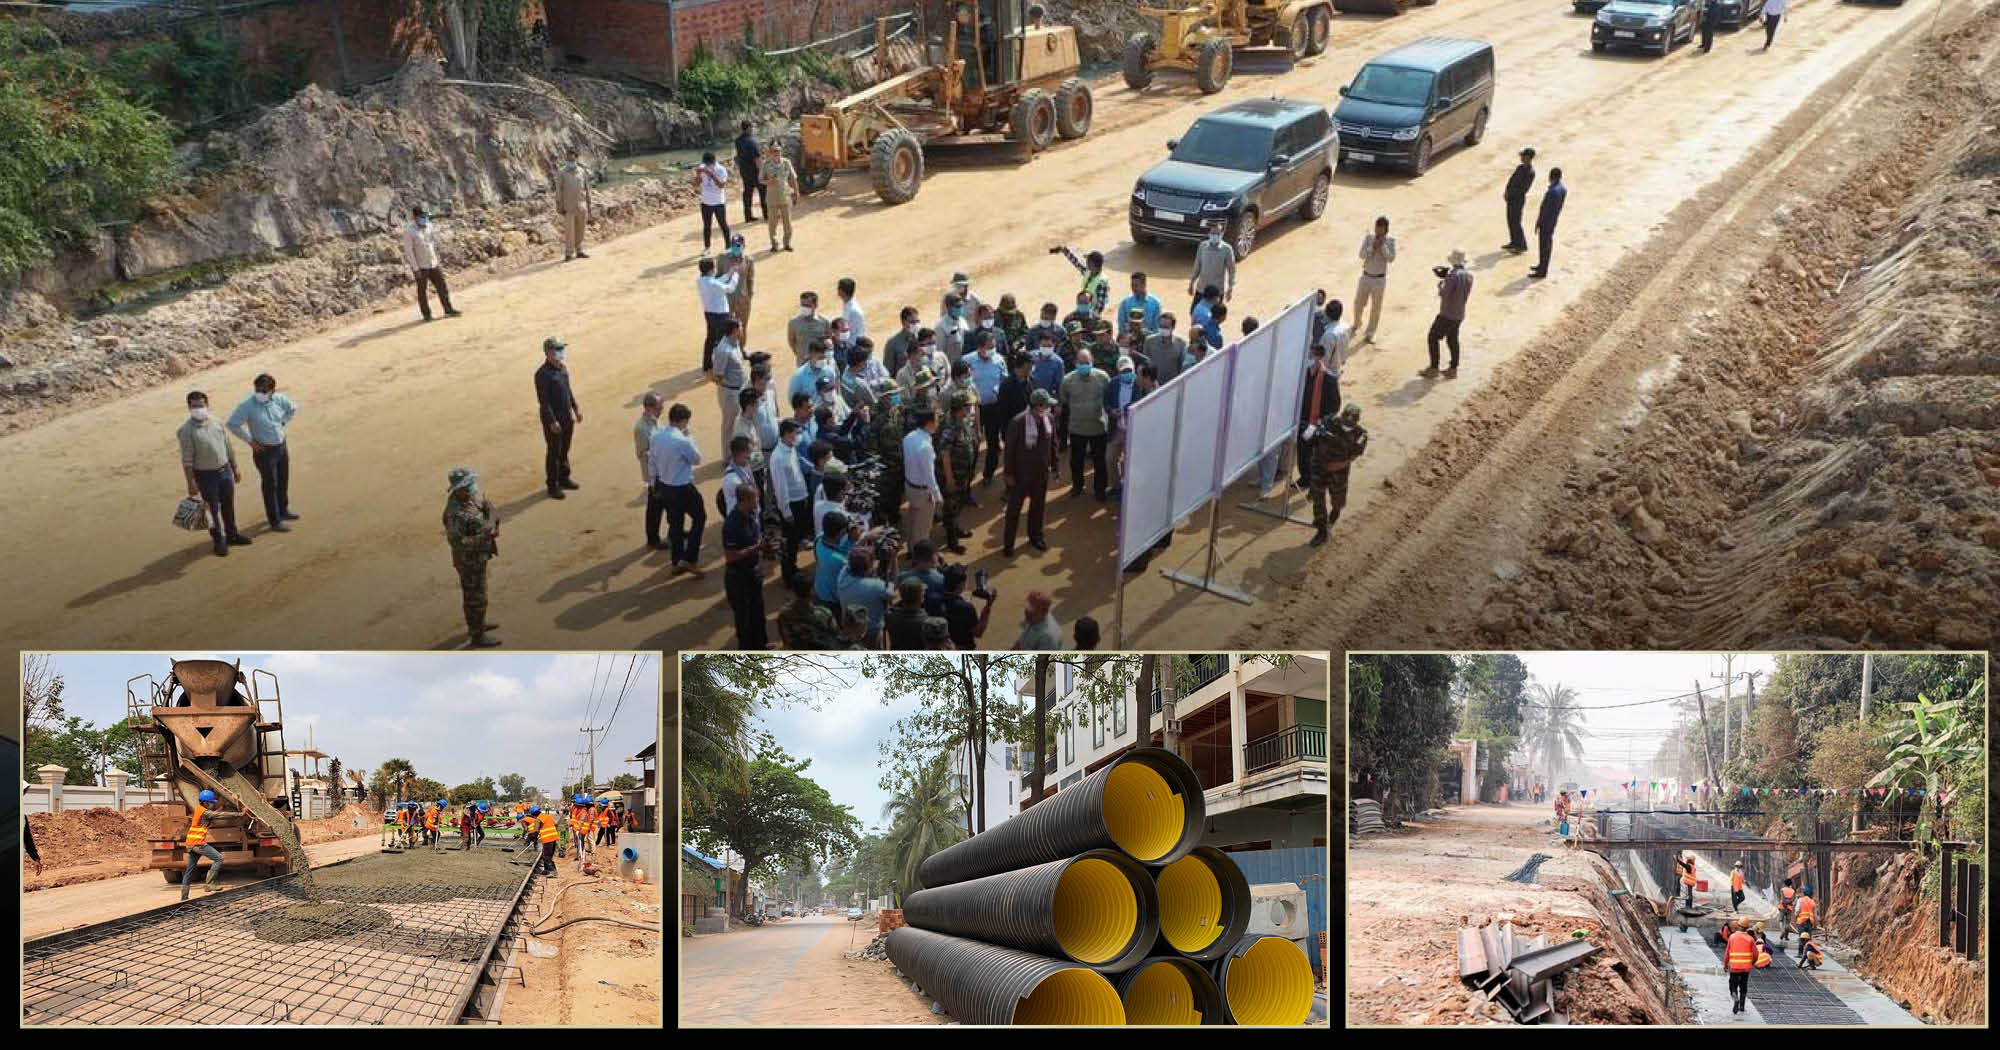 Siem Reap 38-Road Renovation Project 30% Complete Despite Surge in Community Outbreak